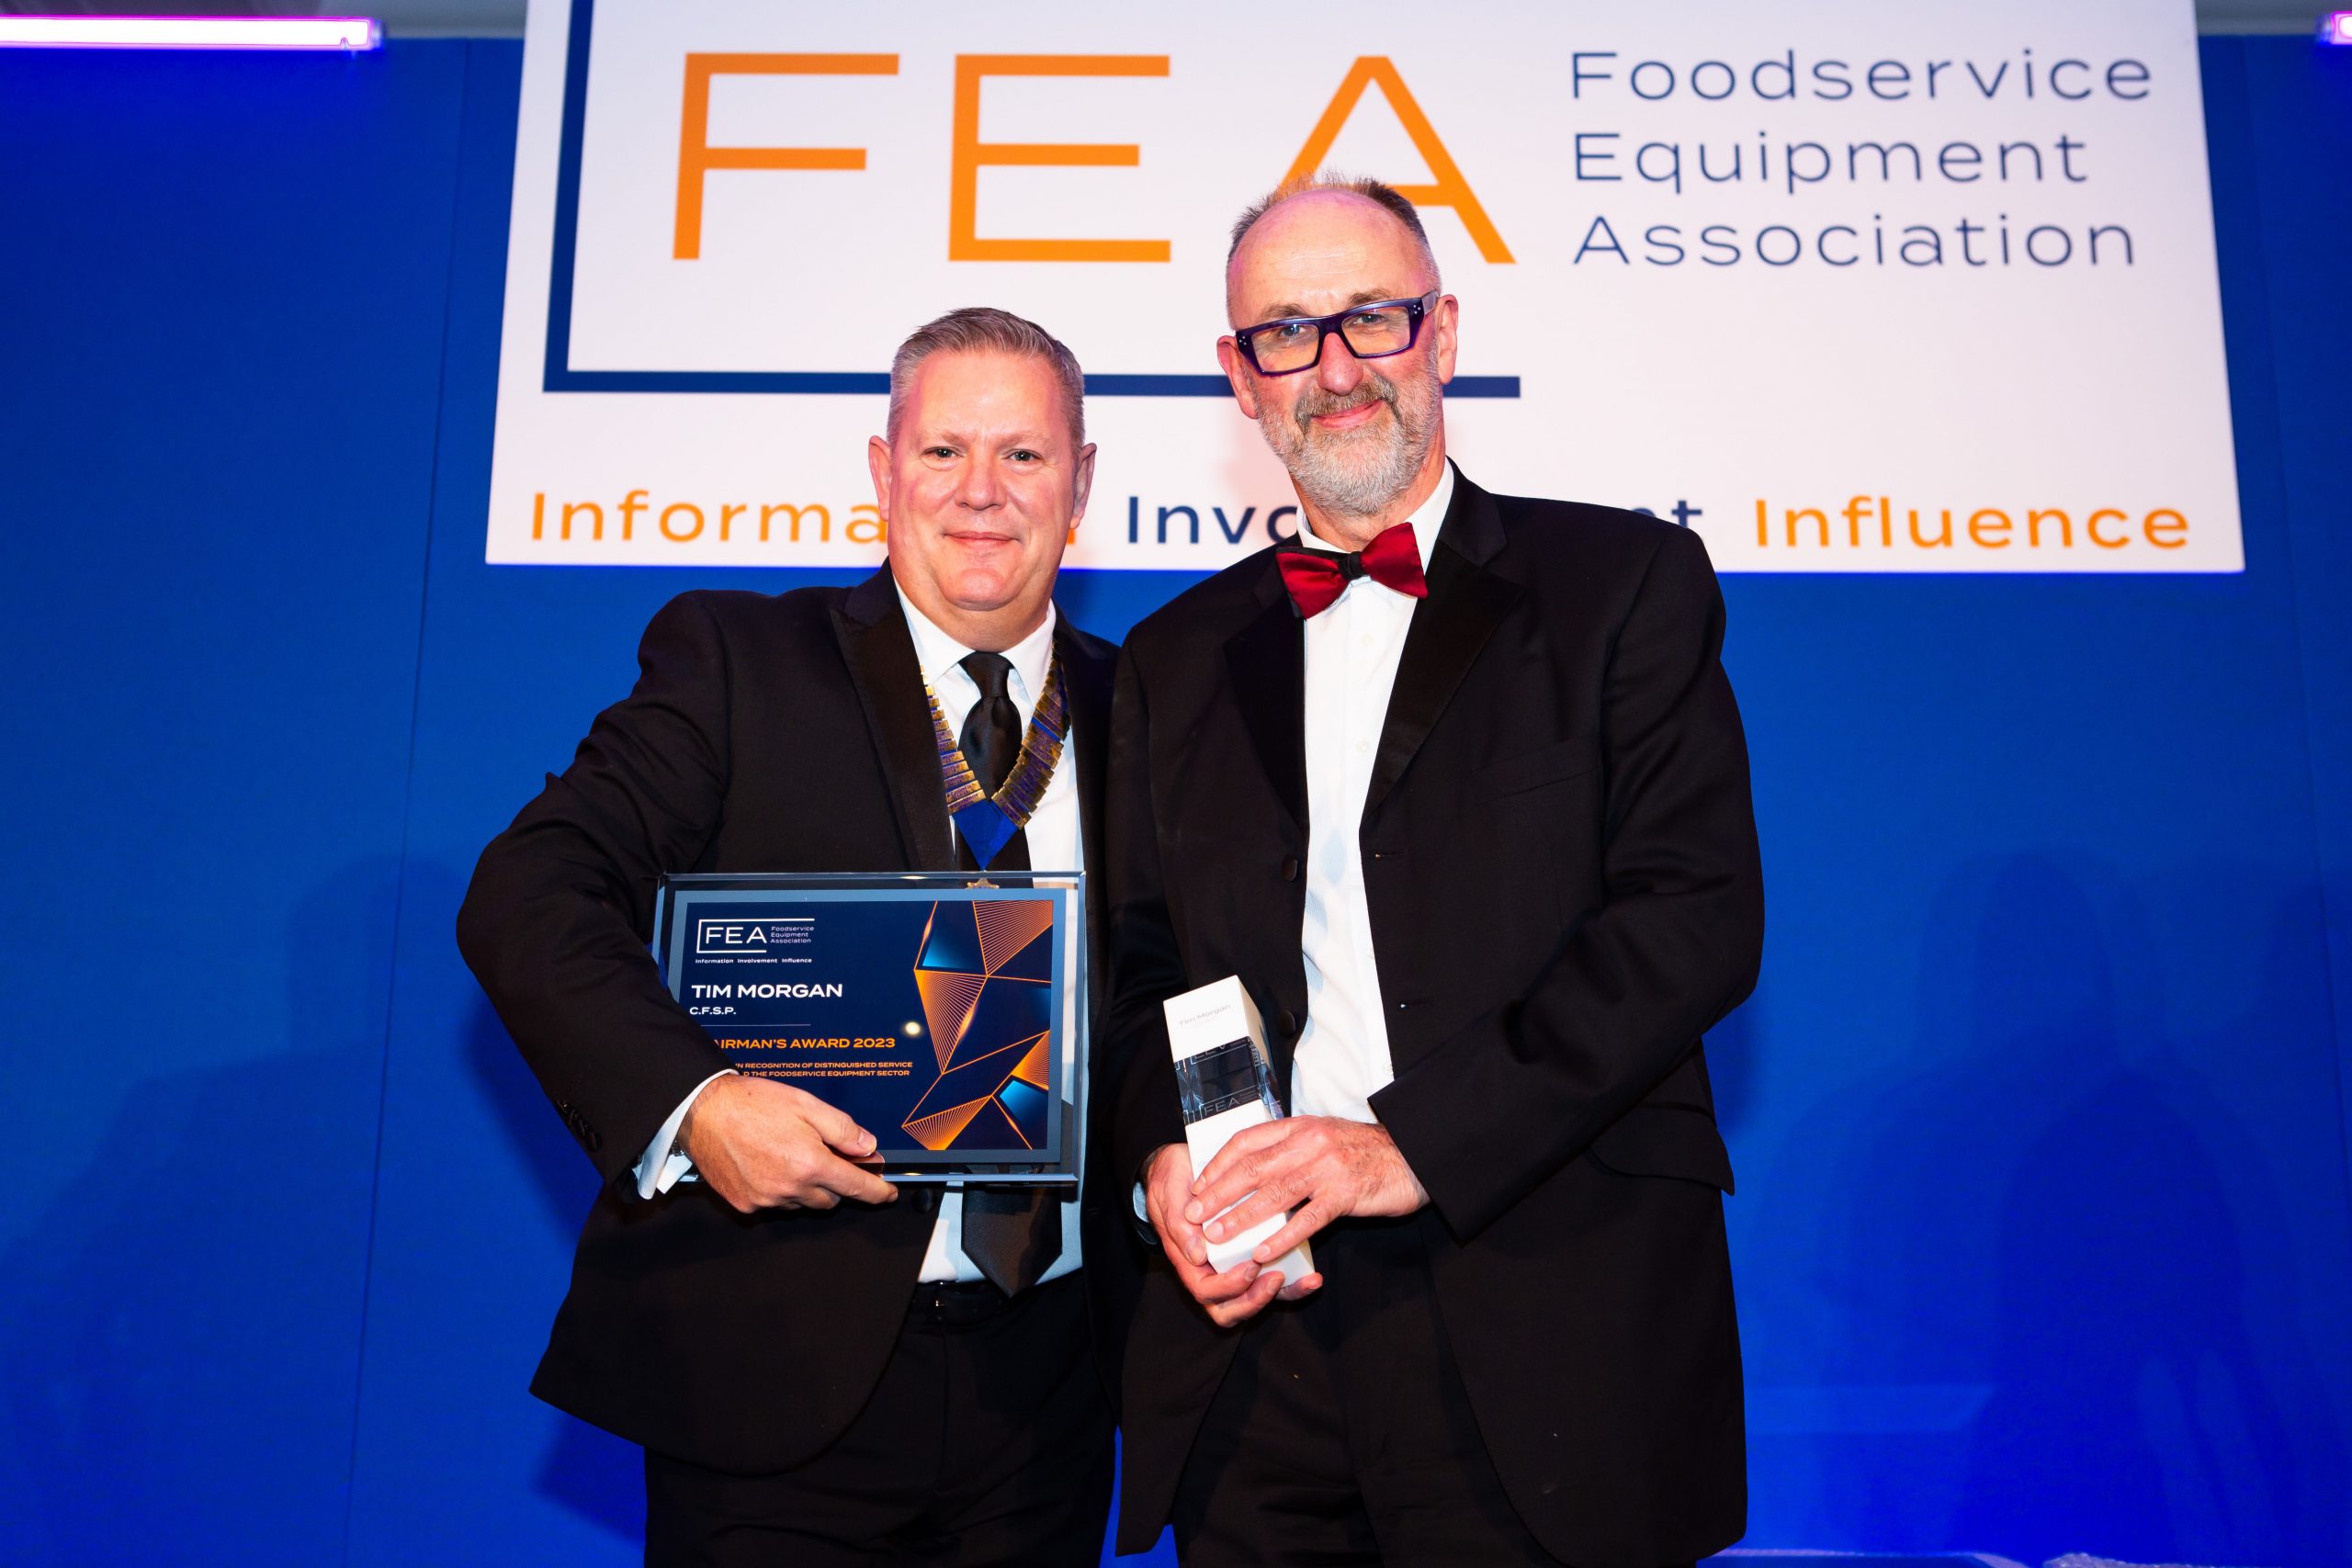 ‘Chuffed to bits’ foodservice PR wins FEA award